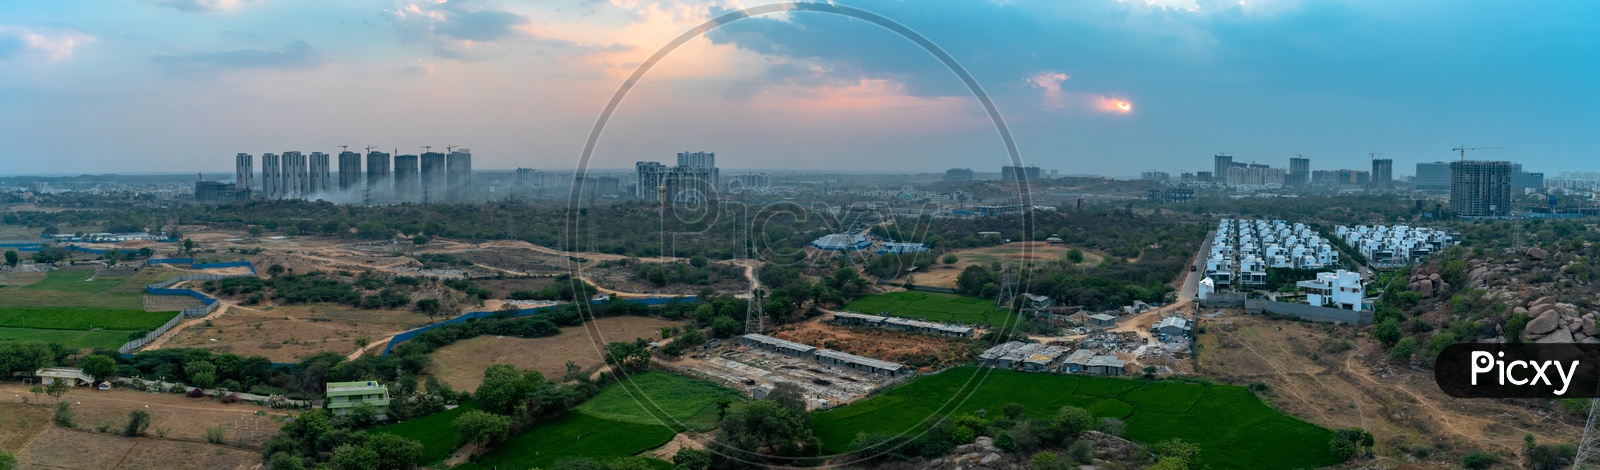 Panorama view of city from Khajaguda hills, Manikonda, Hyderabad.